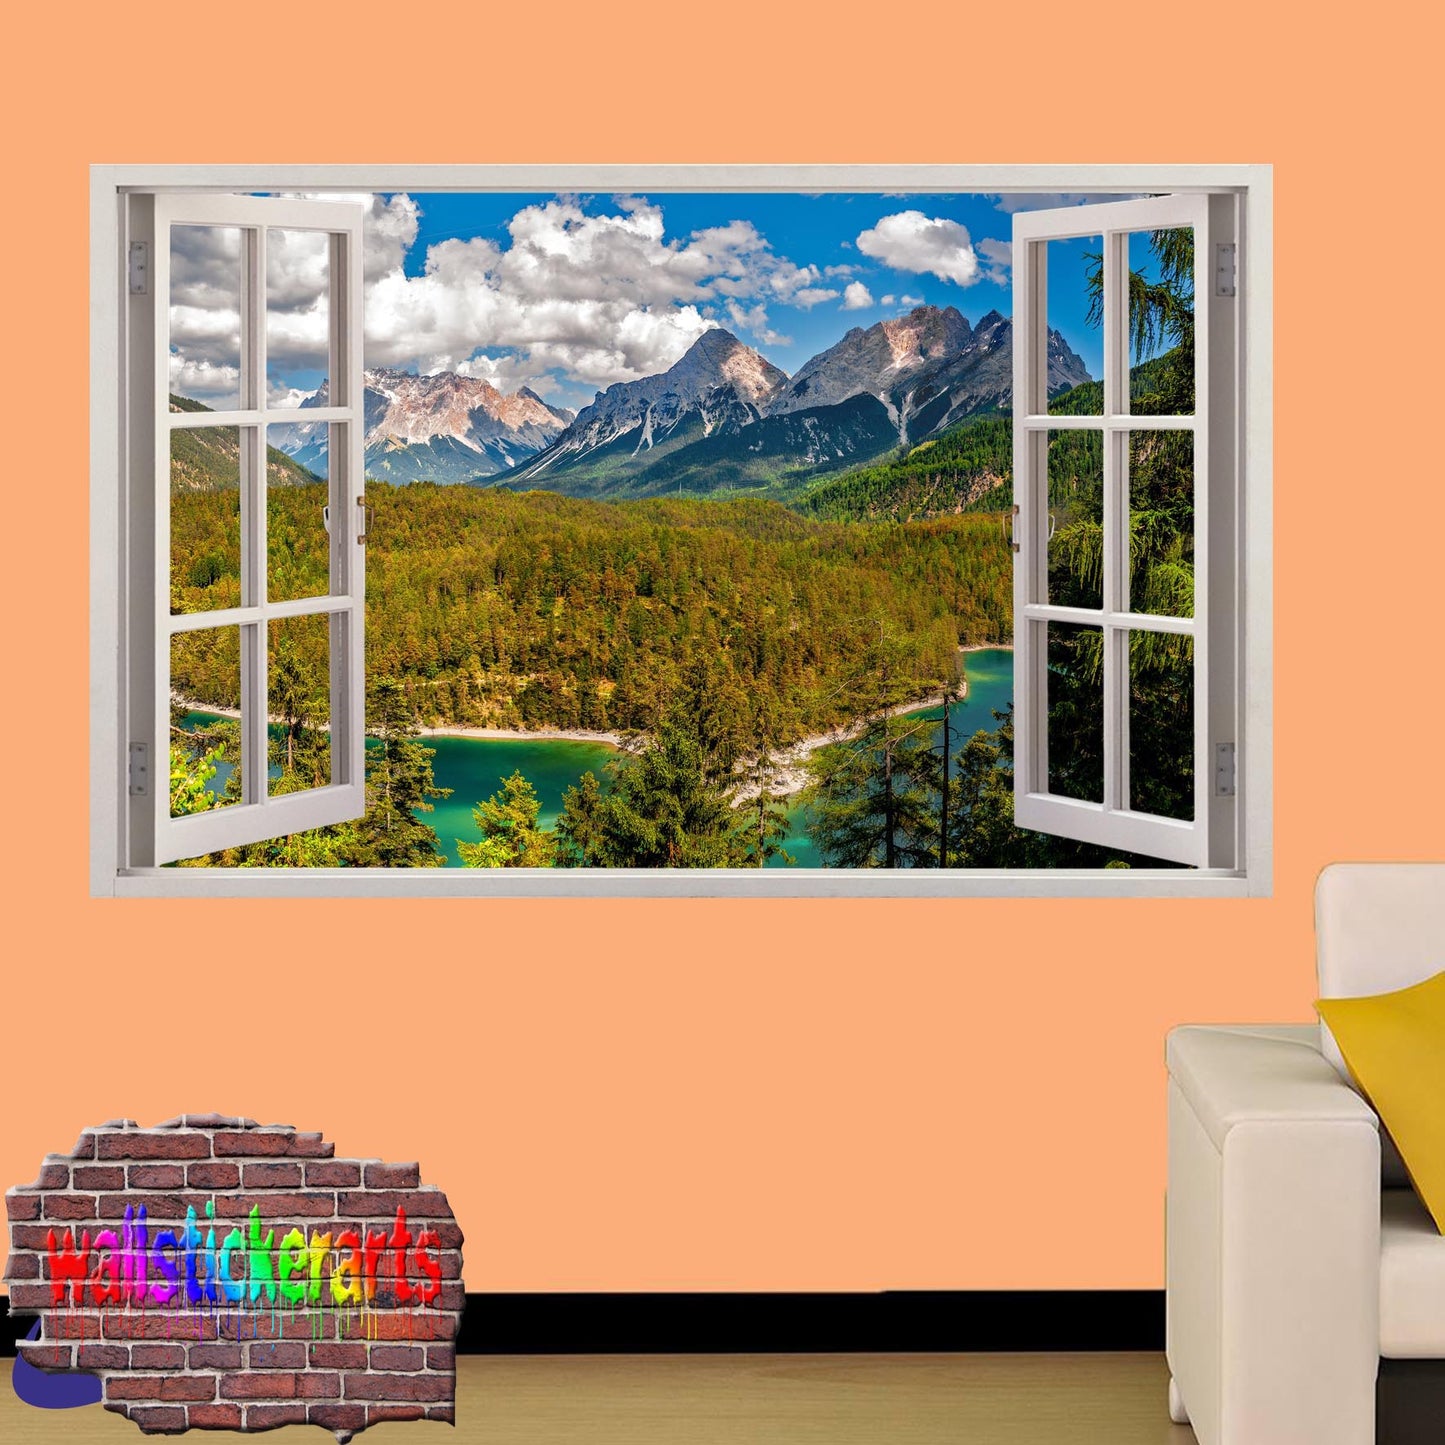 River Lake Mountains 3d Window Wall Sticker Room Decor Decal Mural YA1